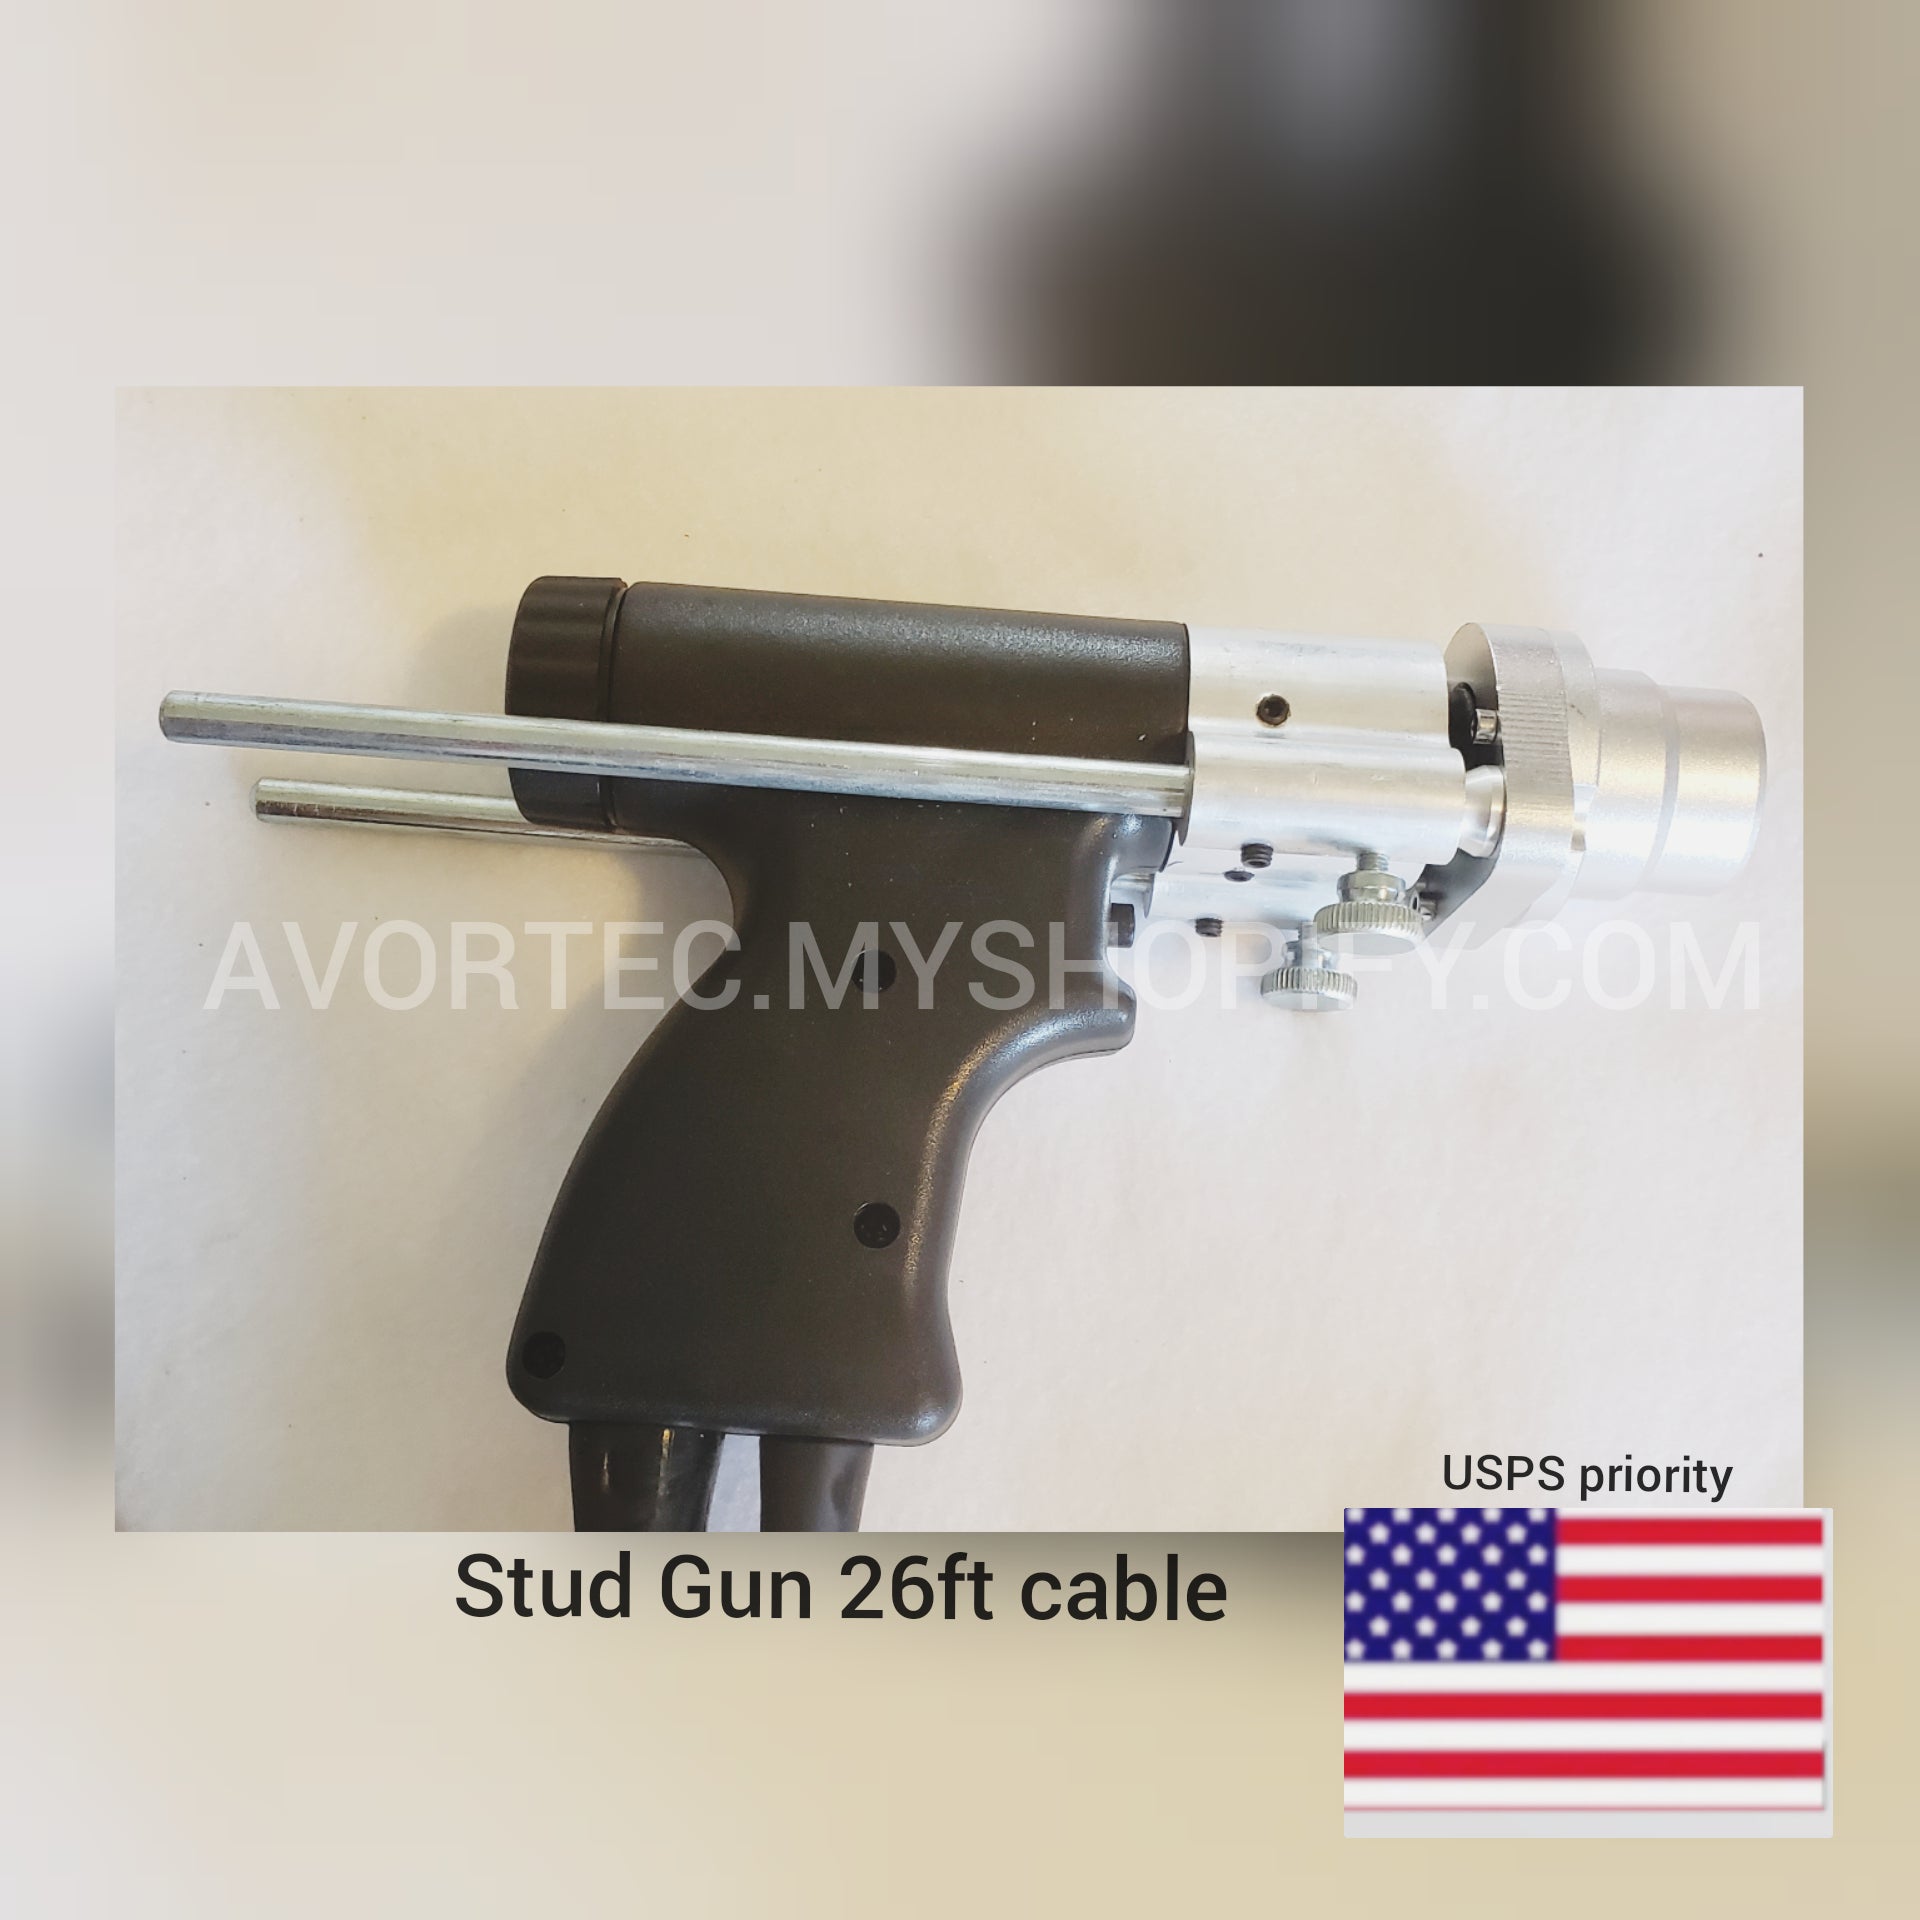 Stud gun for lift ARC or customize stud welder